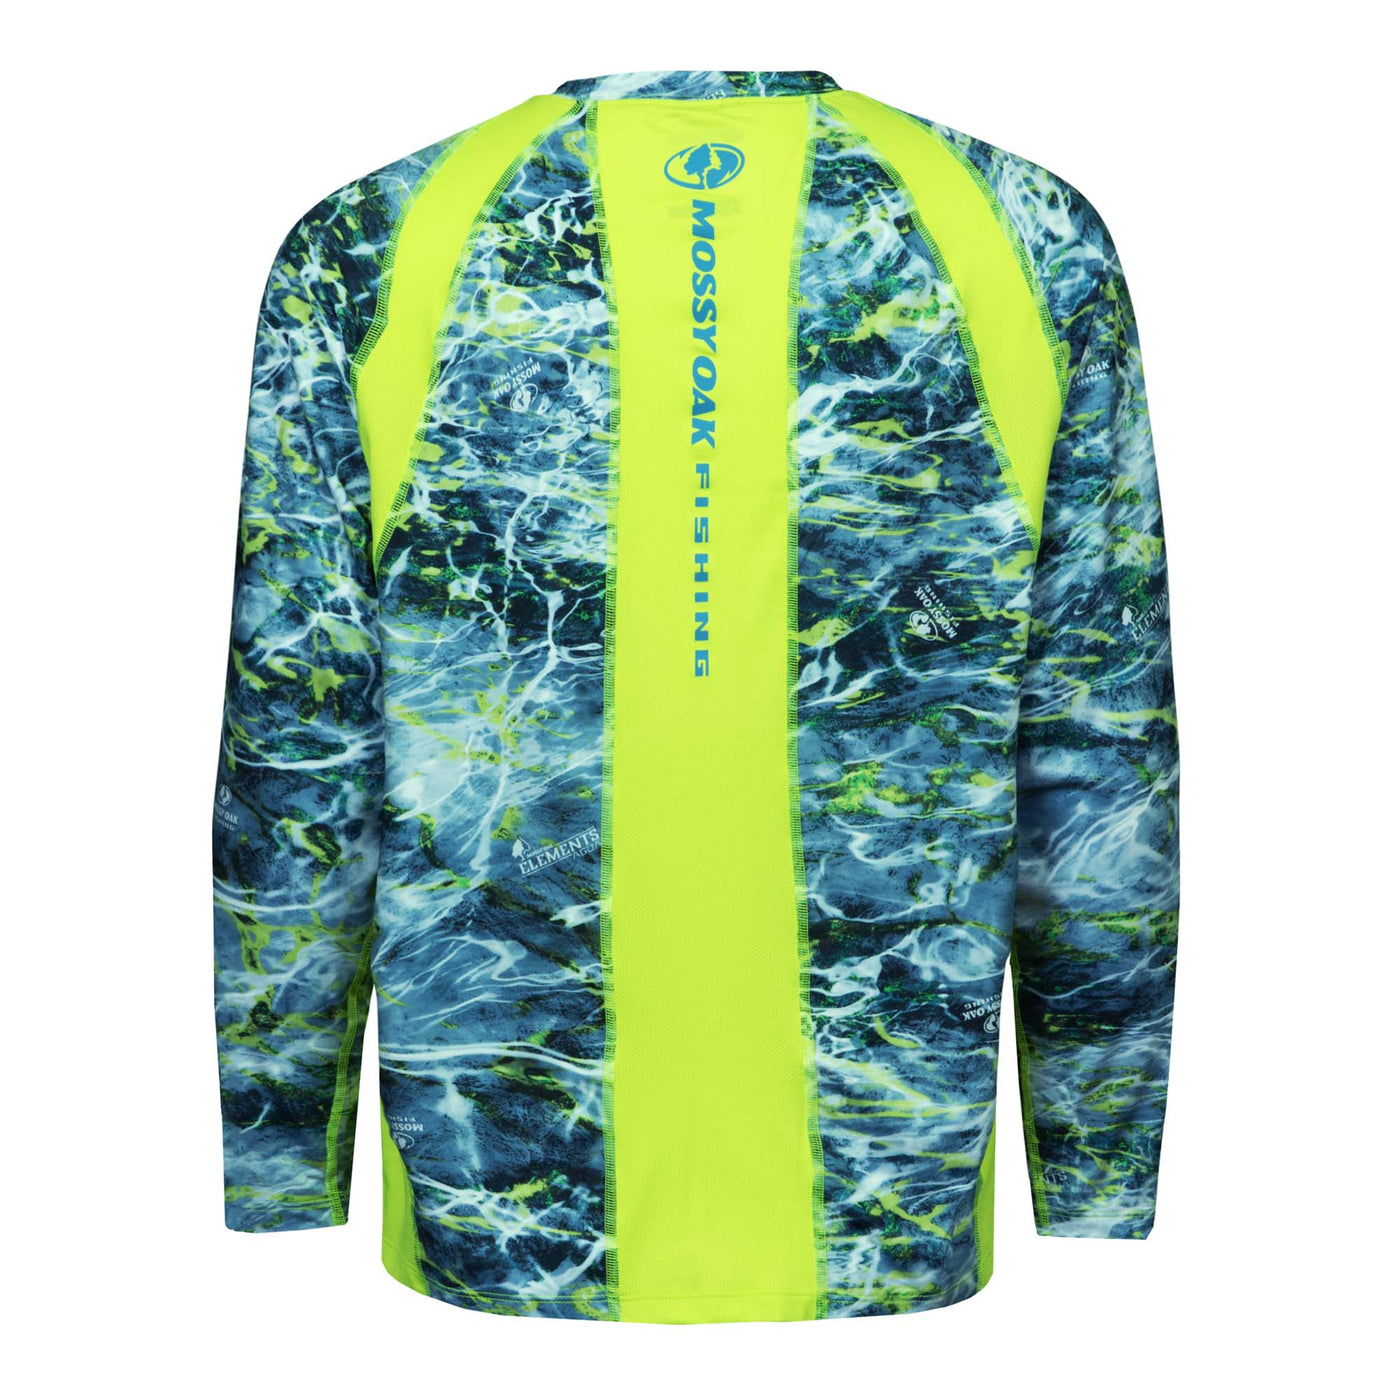 Long Sleeve Fishing Shirts--Performance Hydroplex Technology – The